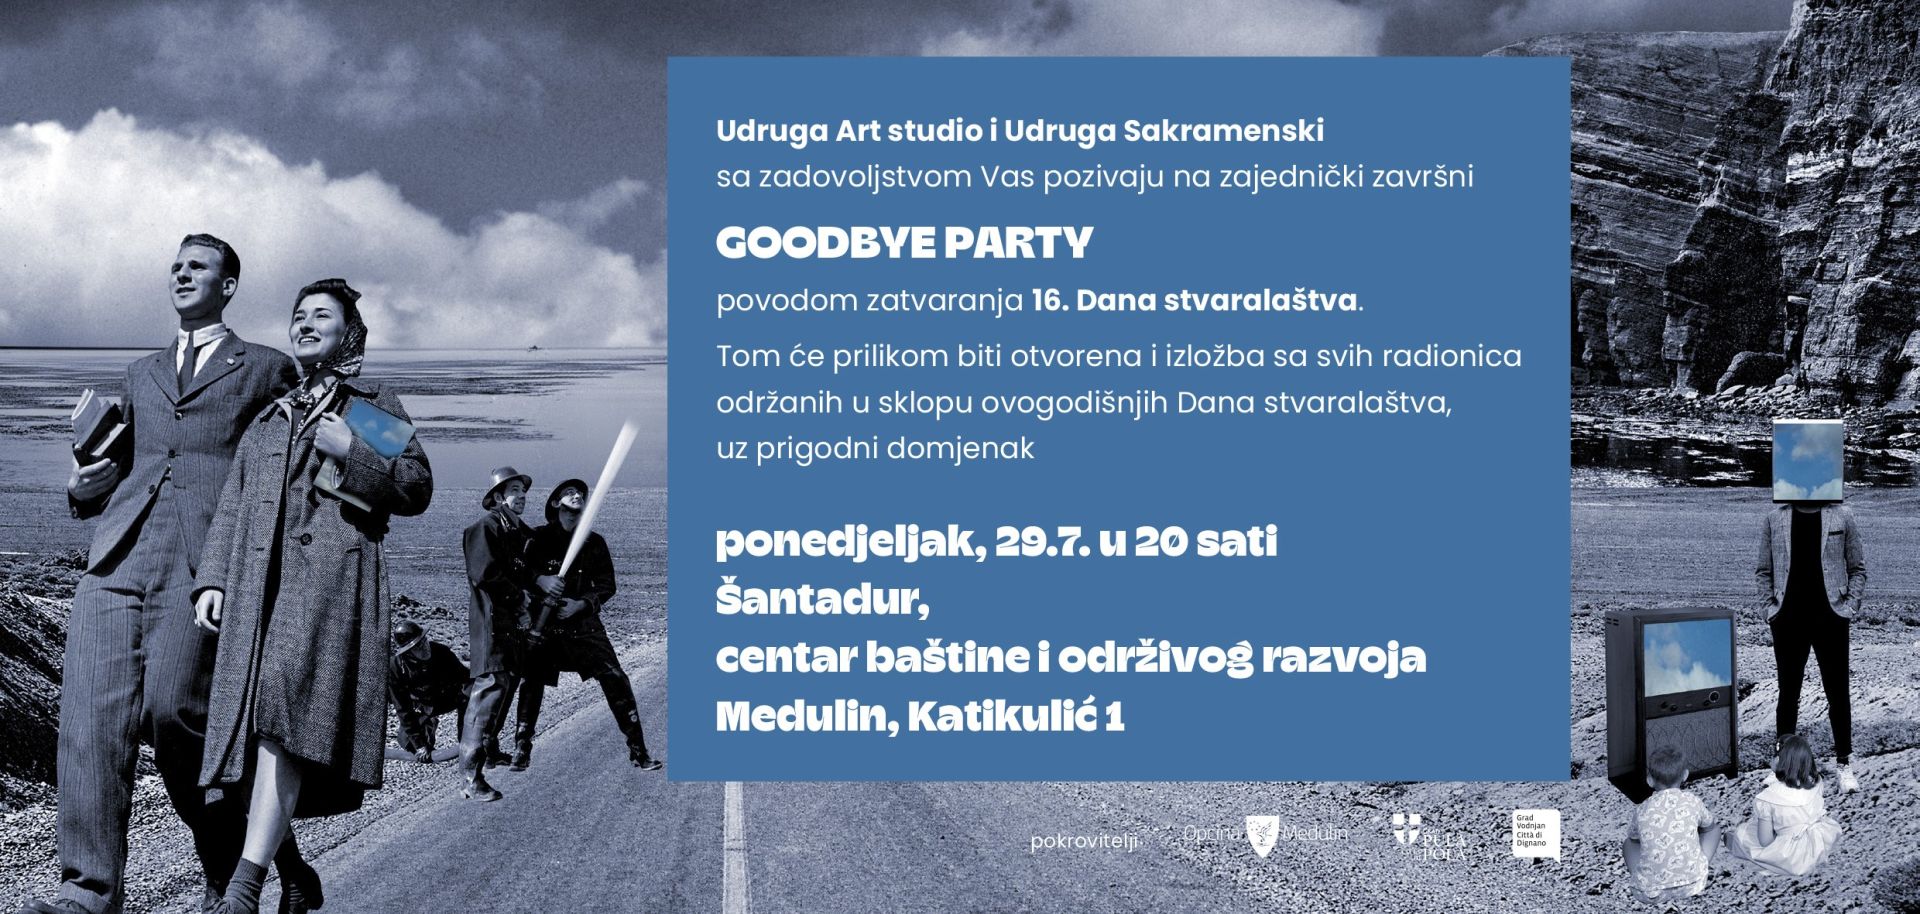 Udruga Art studio i Udruga Sakramenski - GOODBYE PARTY